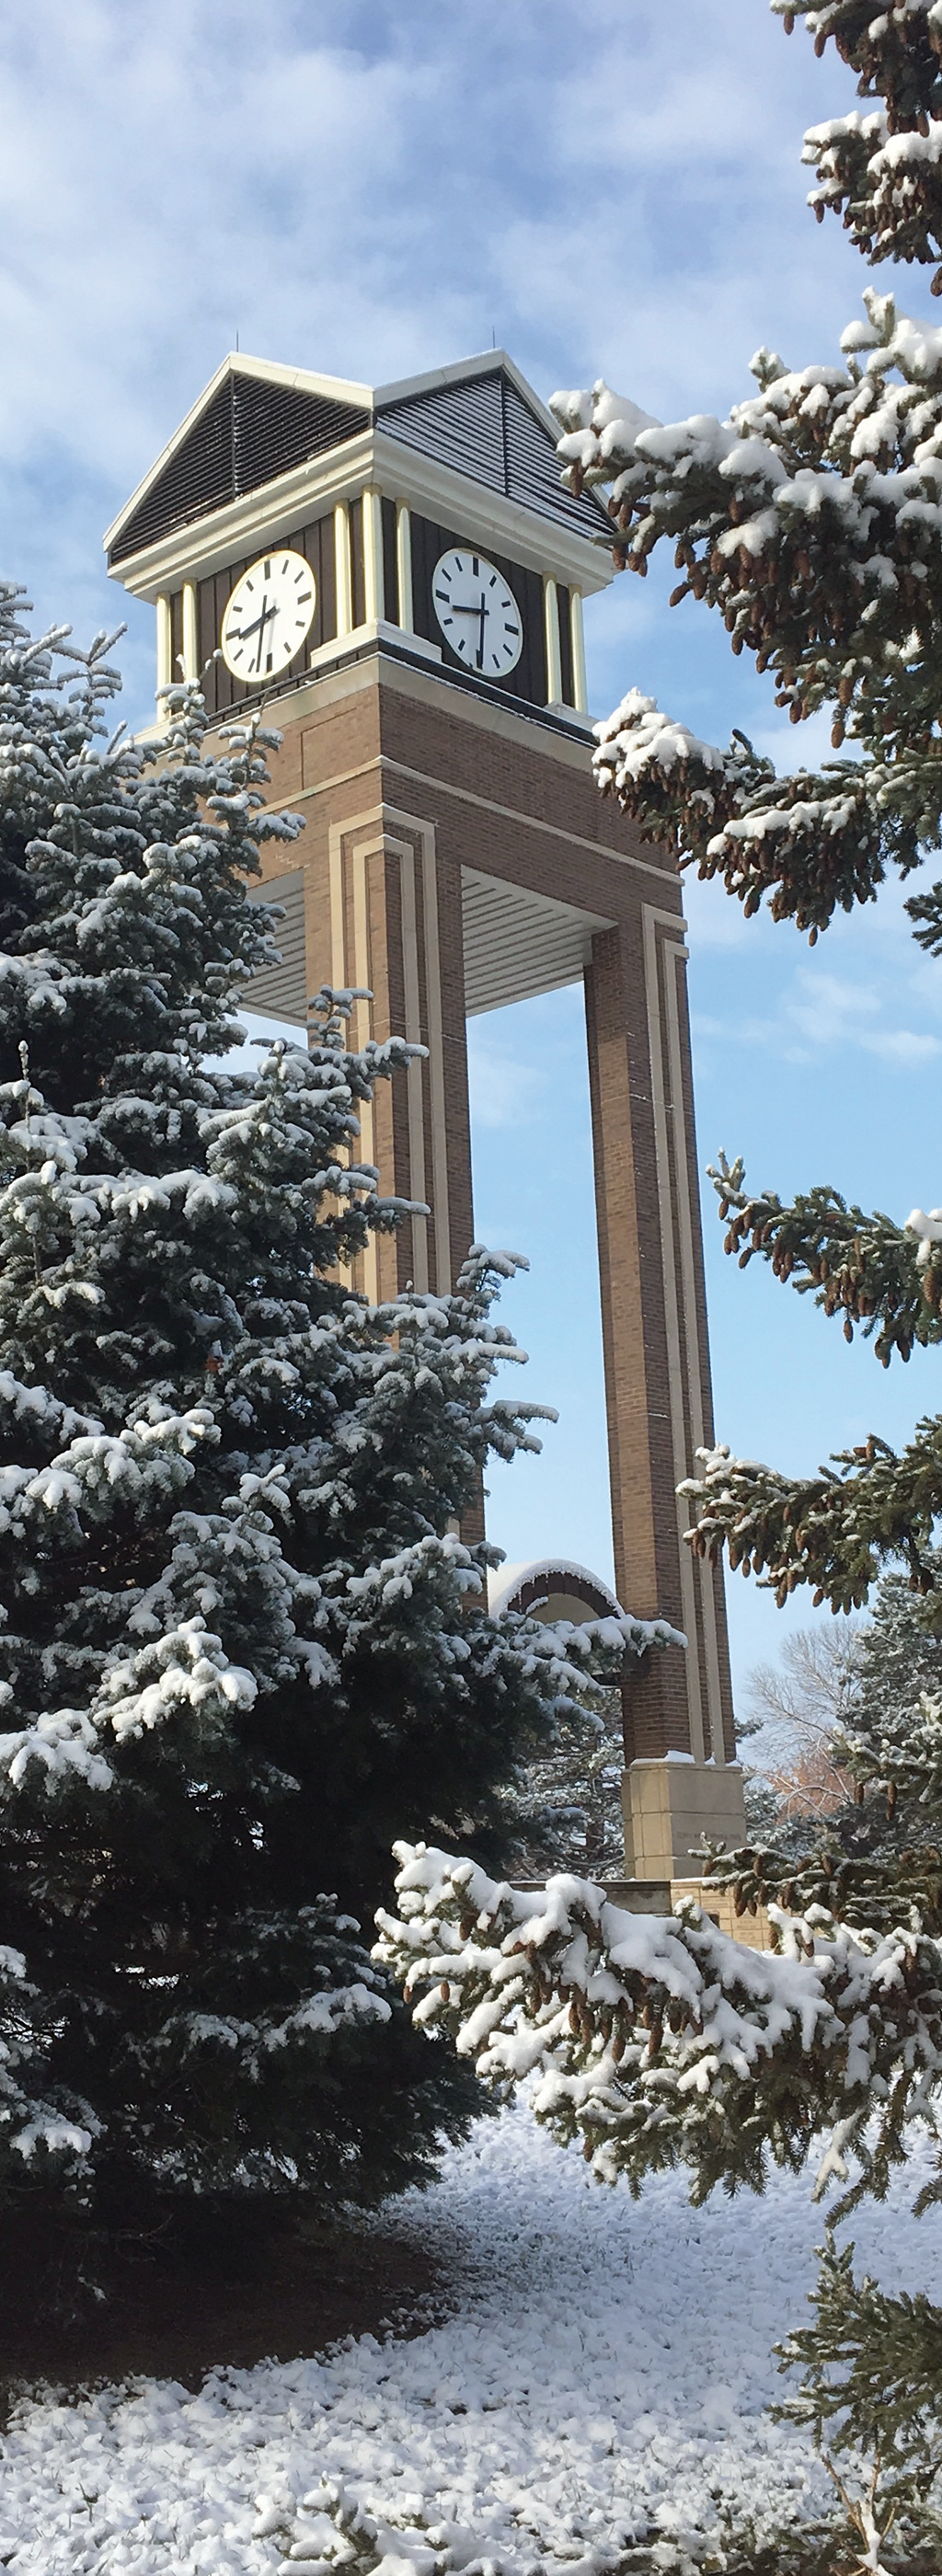 clocktower in winter behind trees